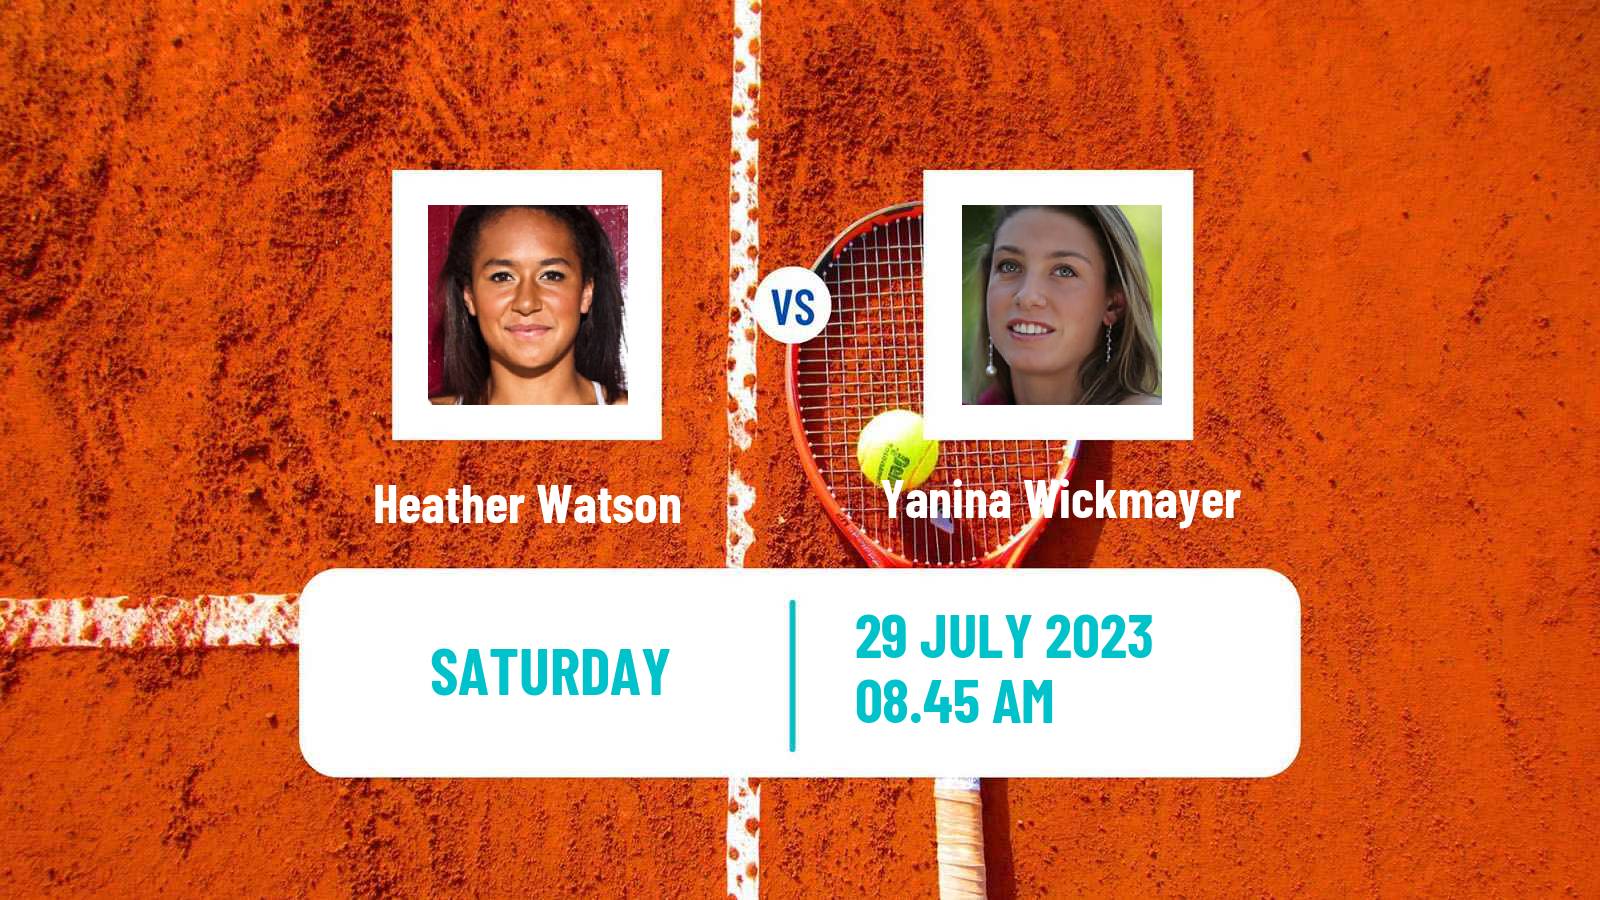 Tennis WTA Warsaw Heather Watson - Yanina Wickmayer